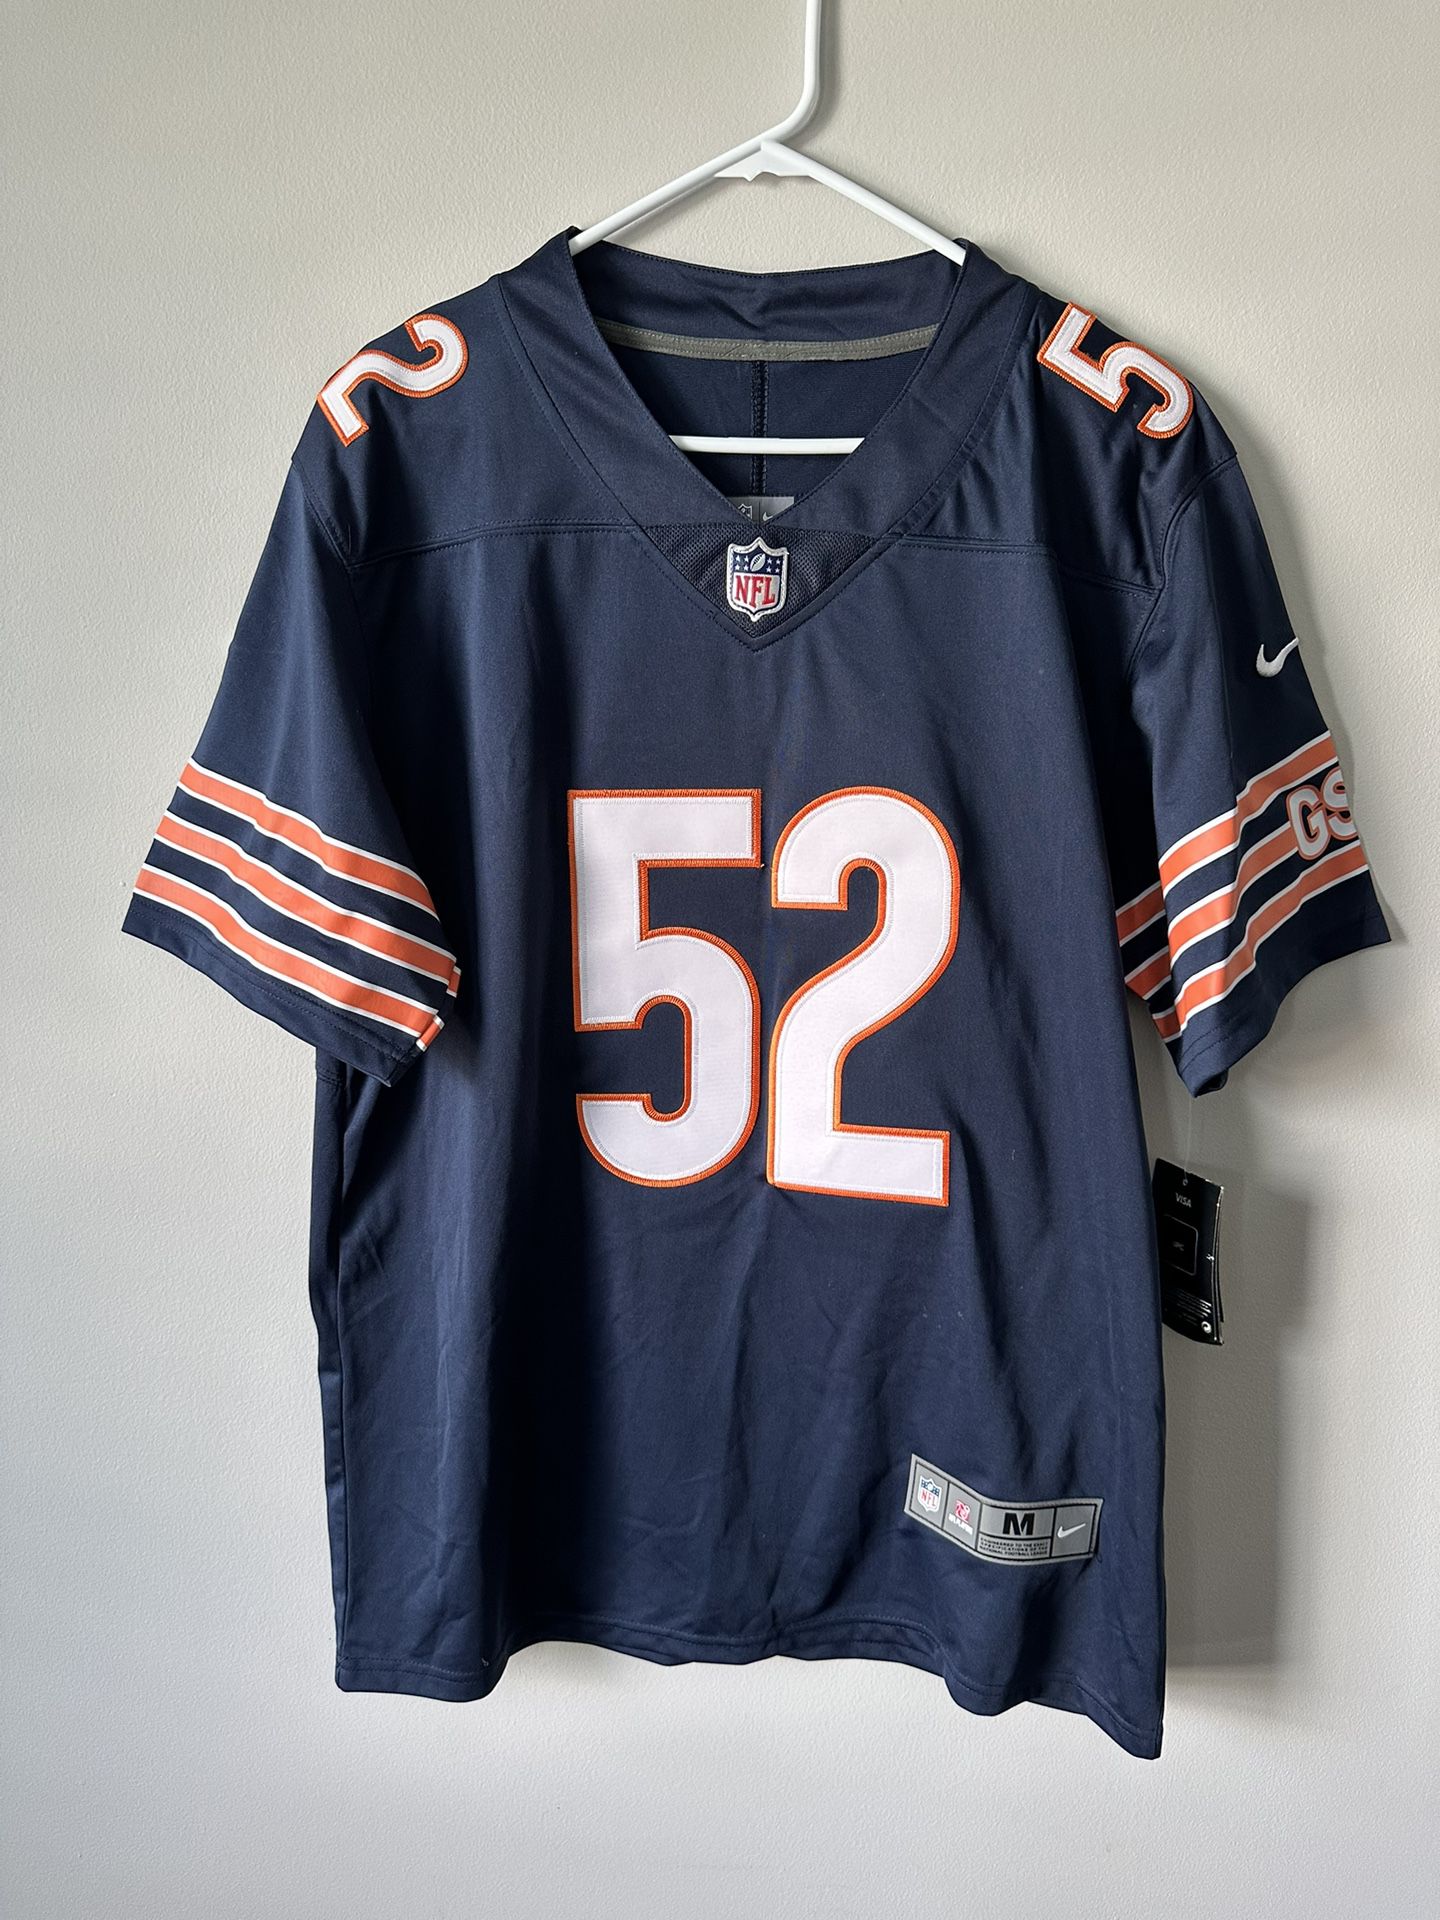 bears jersey stitched